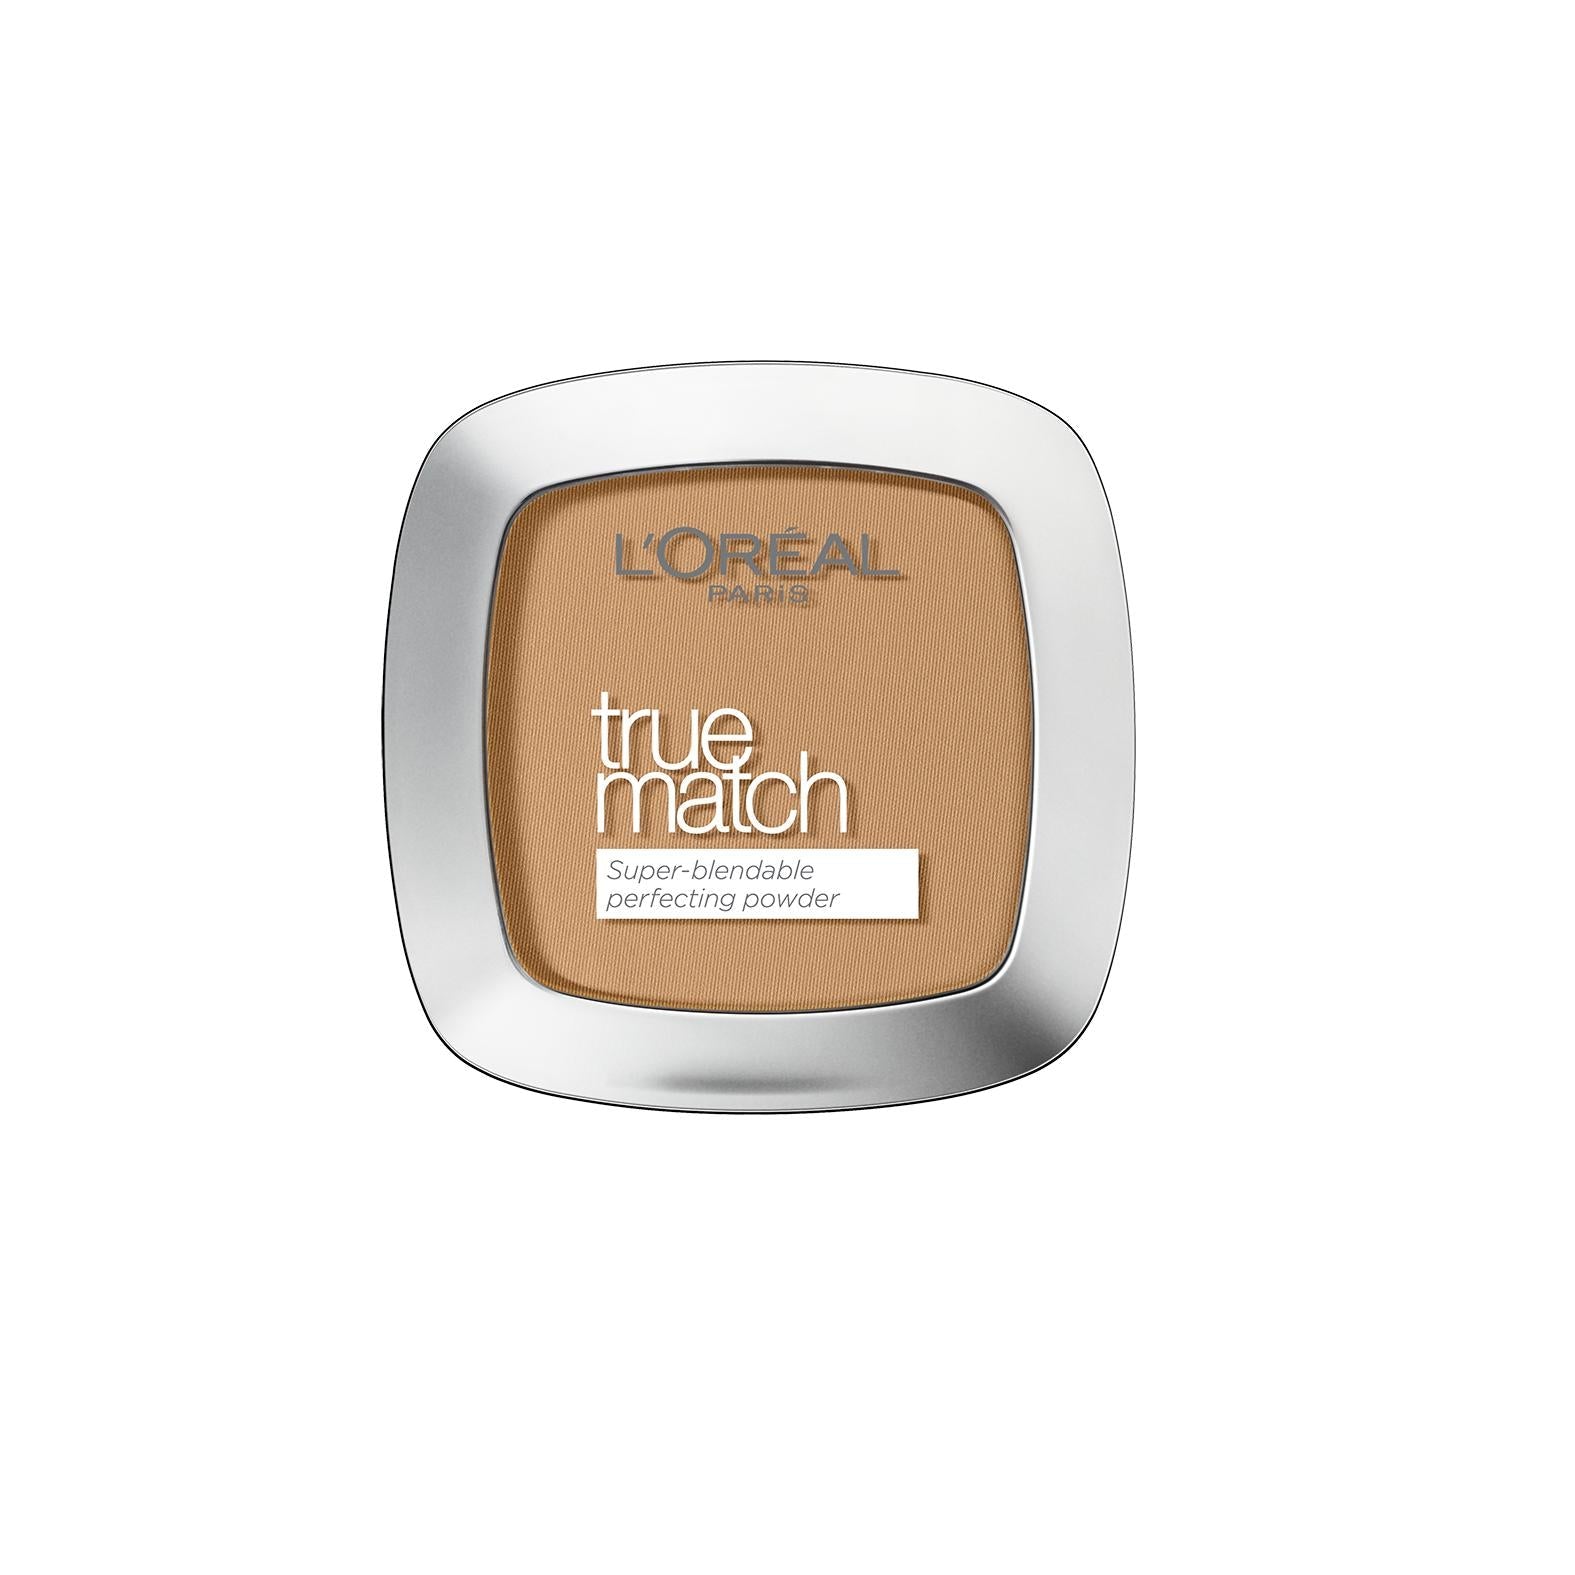 L'oréal Paris Makeup True Match Perfecting Powder